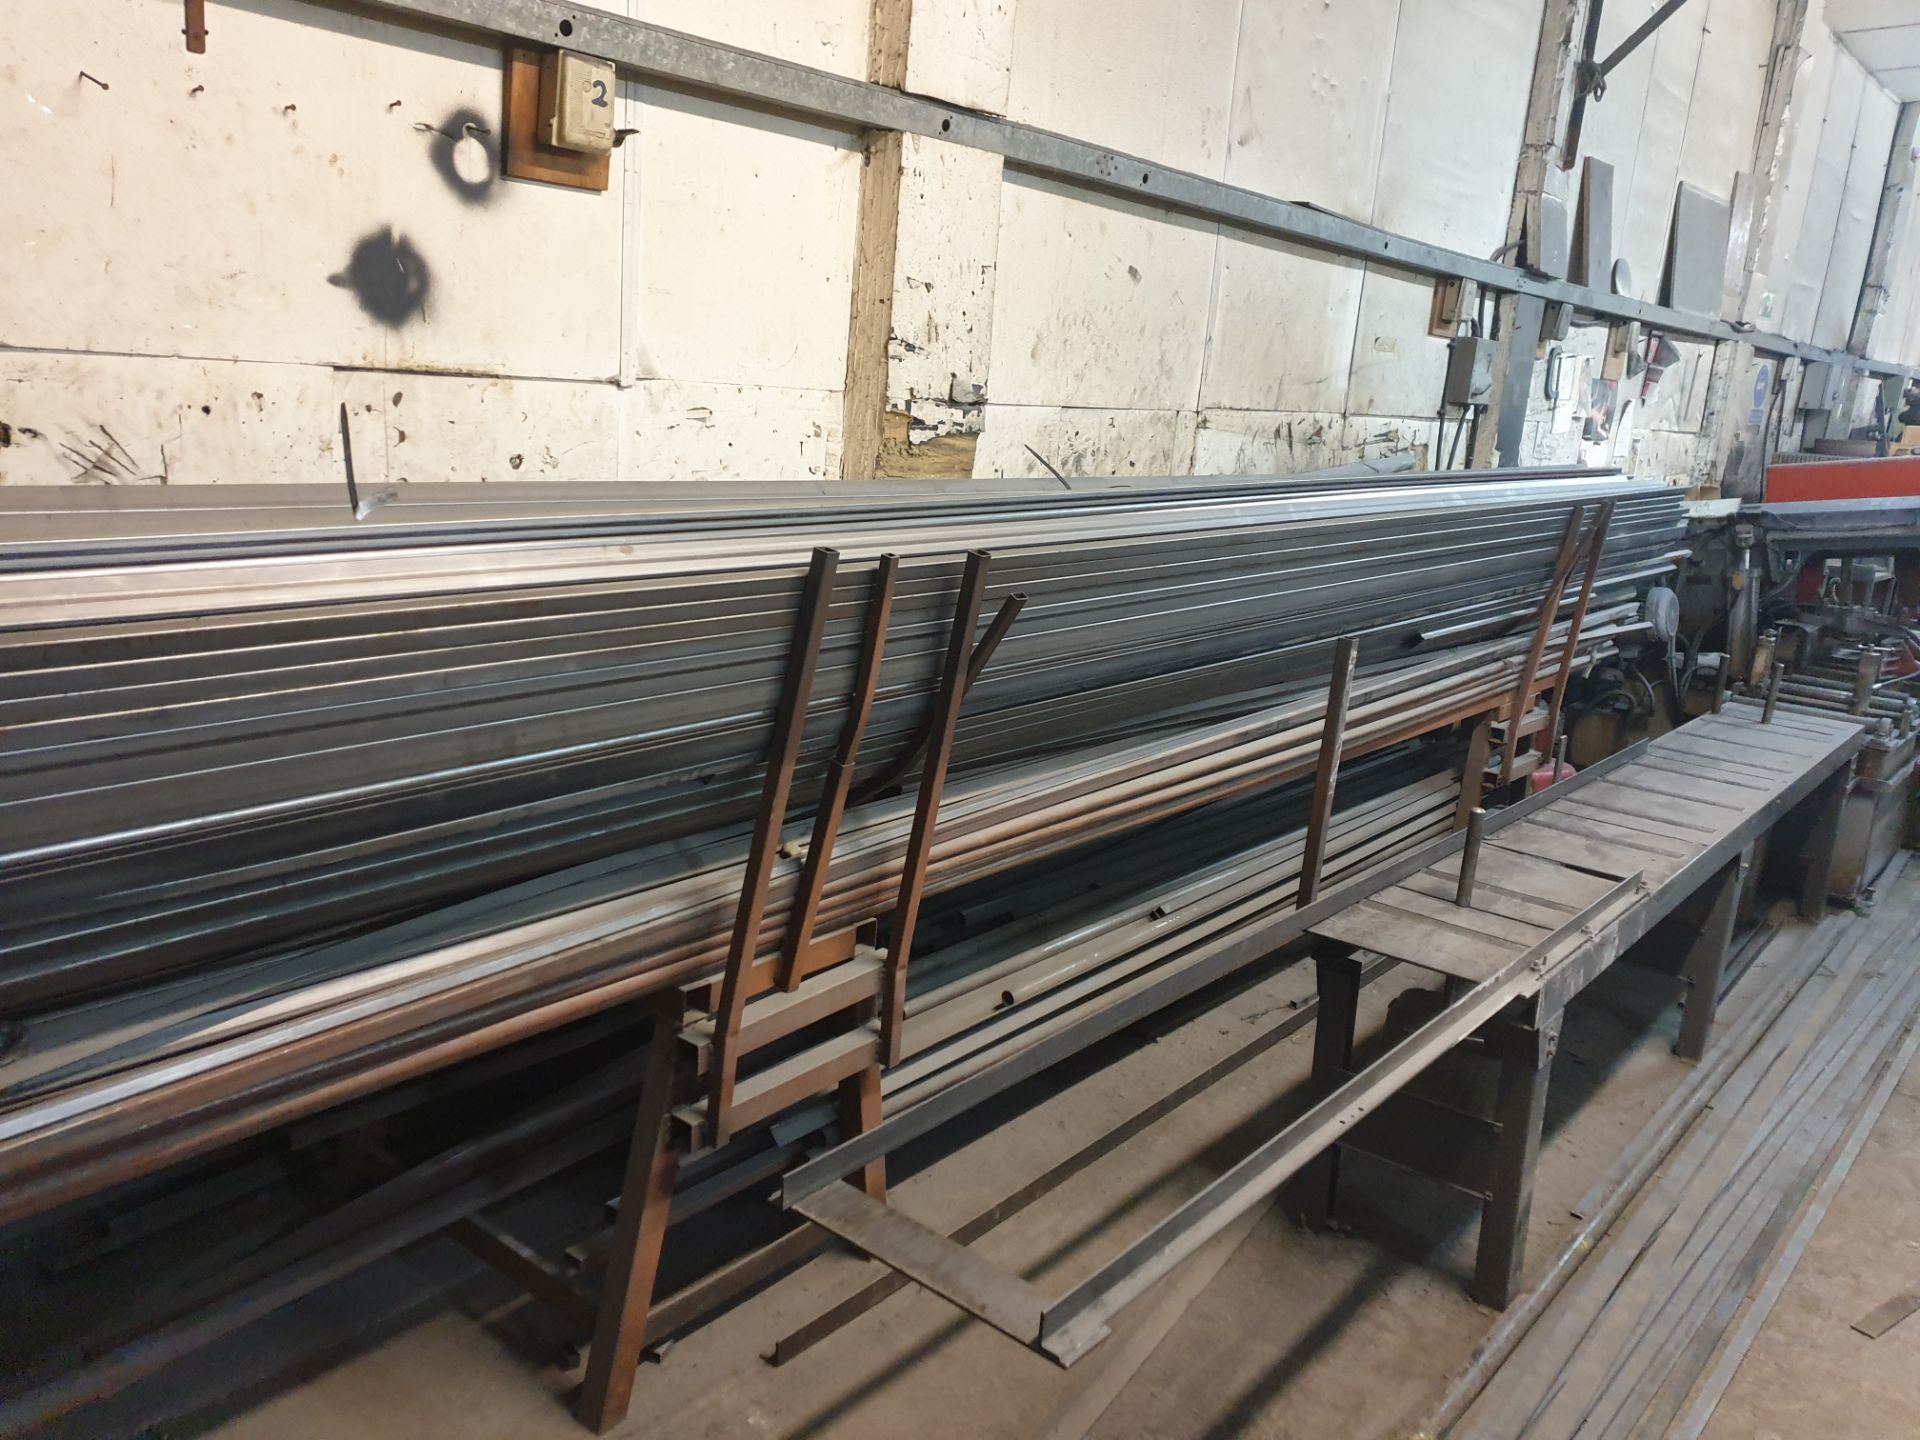 Steel stock to include steel rack - Image 3 of 5